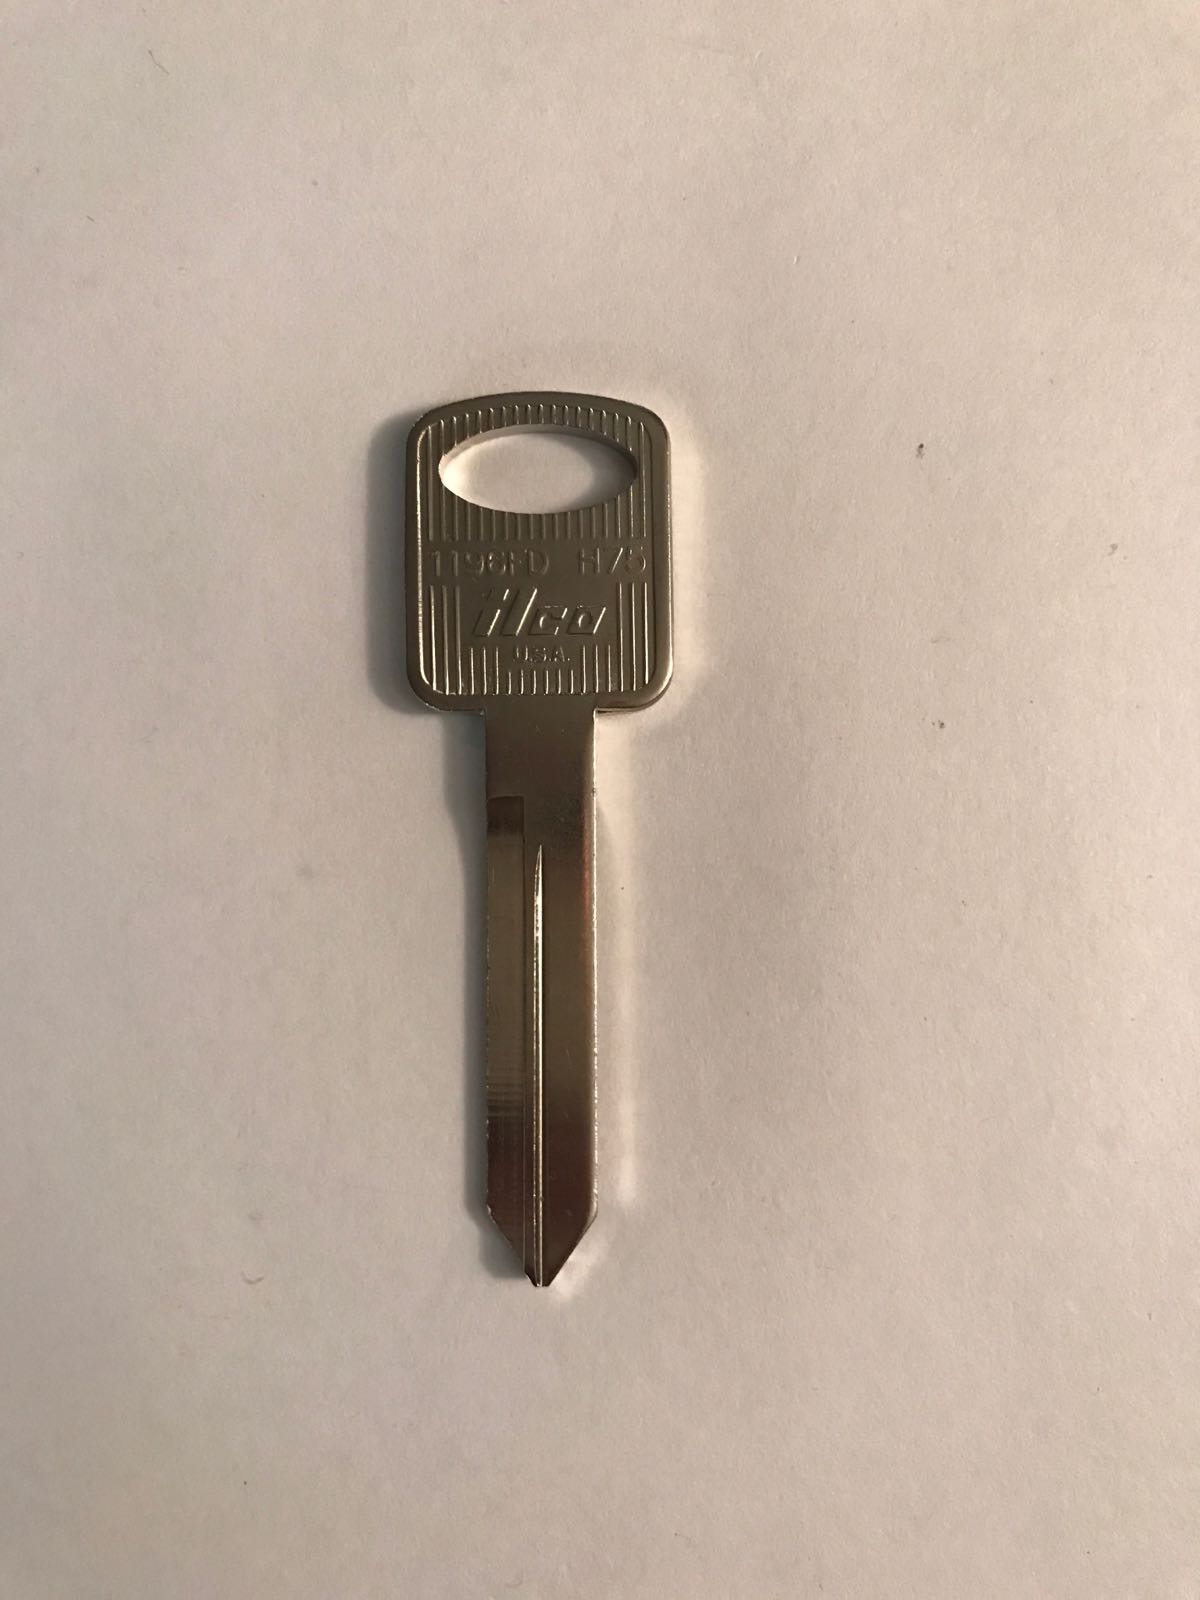 Ключ Mercury 893761. Ford ключ 1964. Входные ключи ноутбука. Железный ключ.